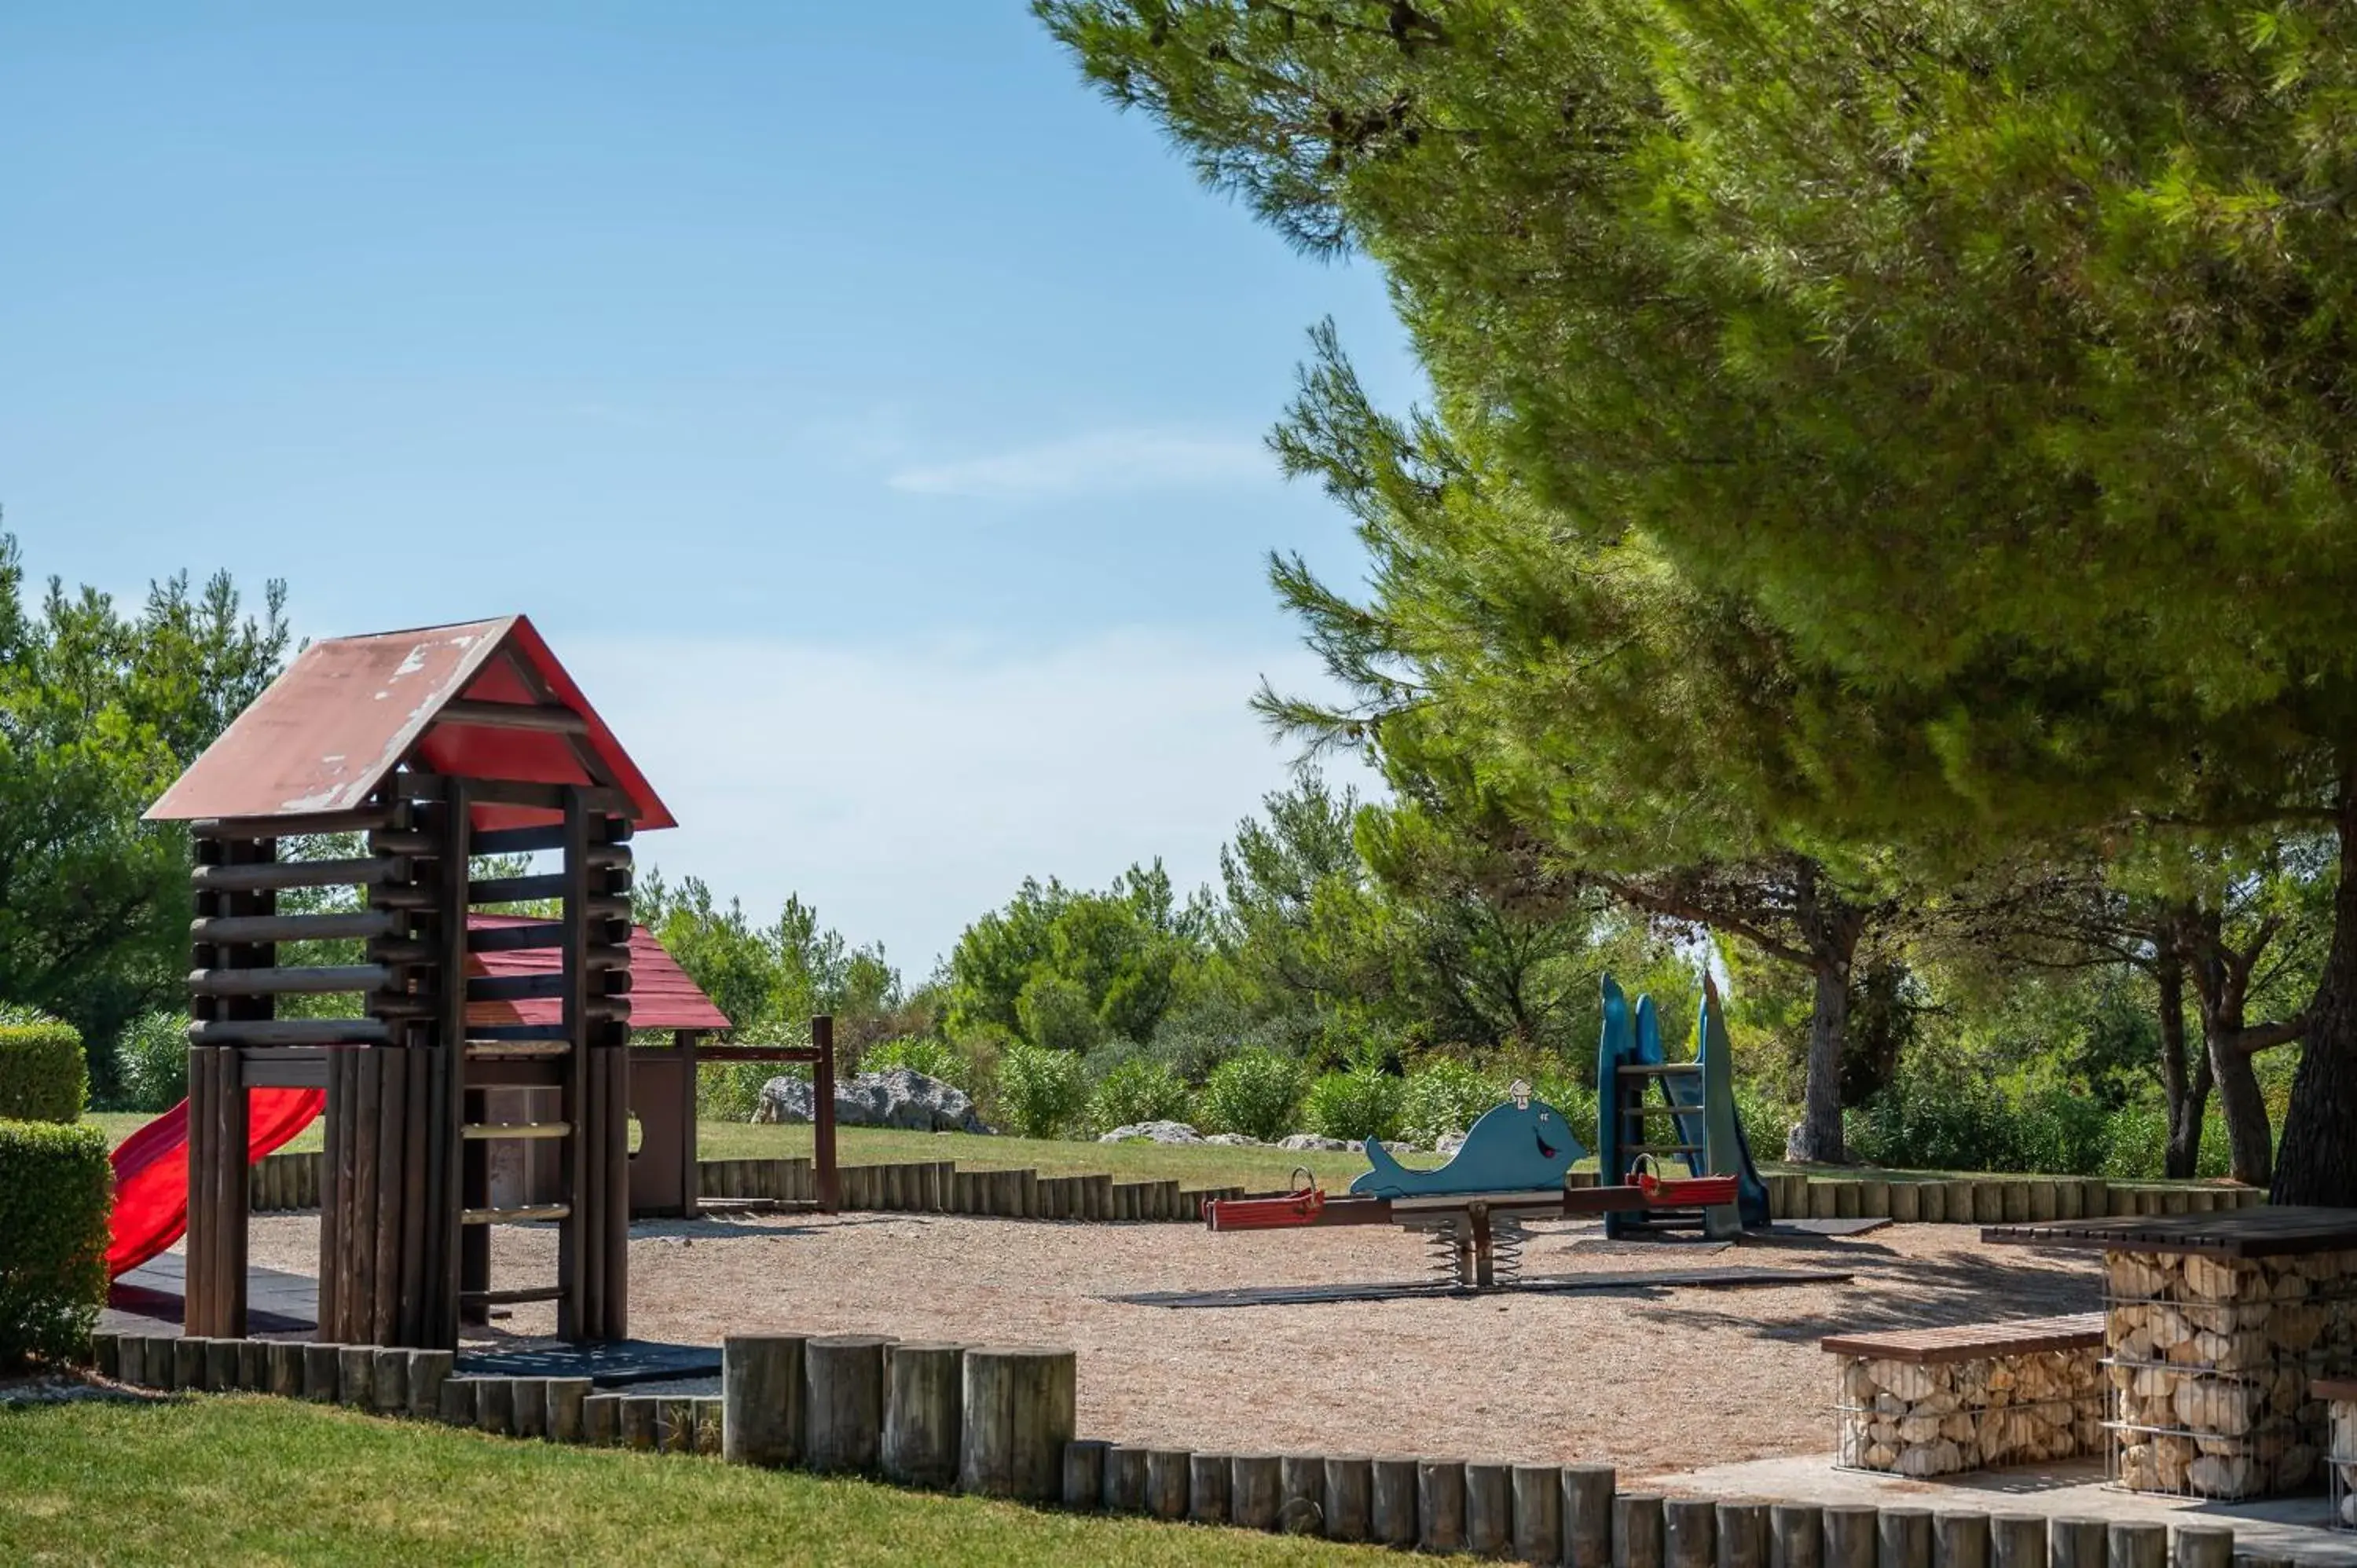 Children play ground, Children's Play Area in Kempinski Hotel Adriatic Istria Croatia